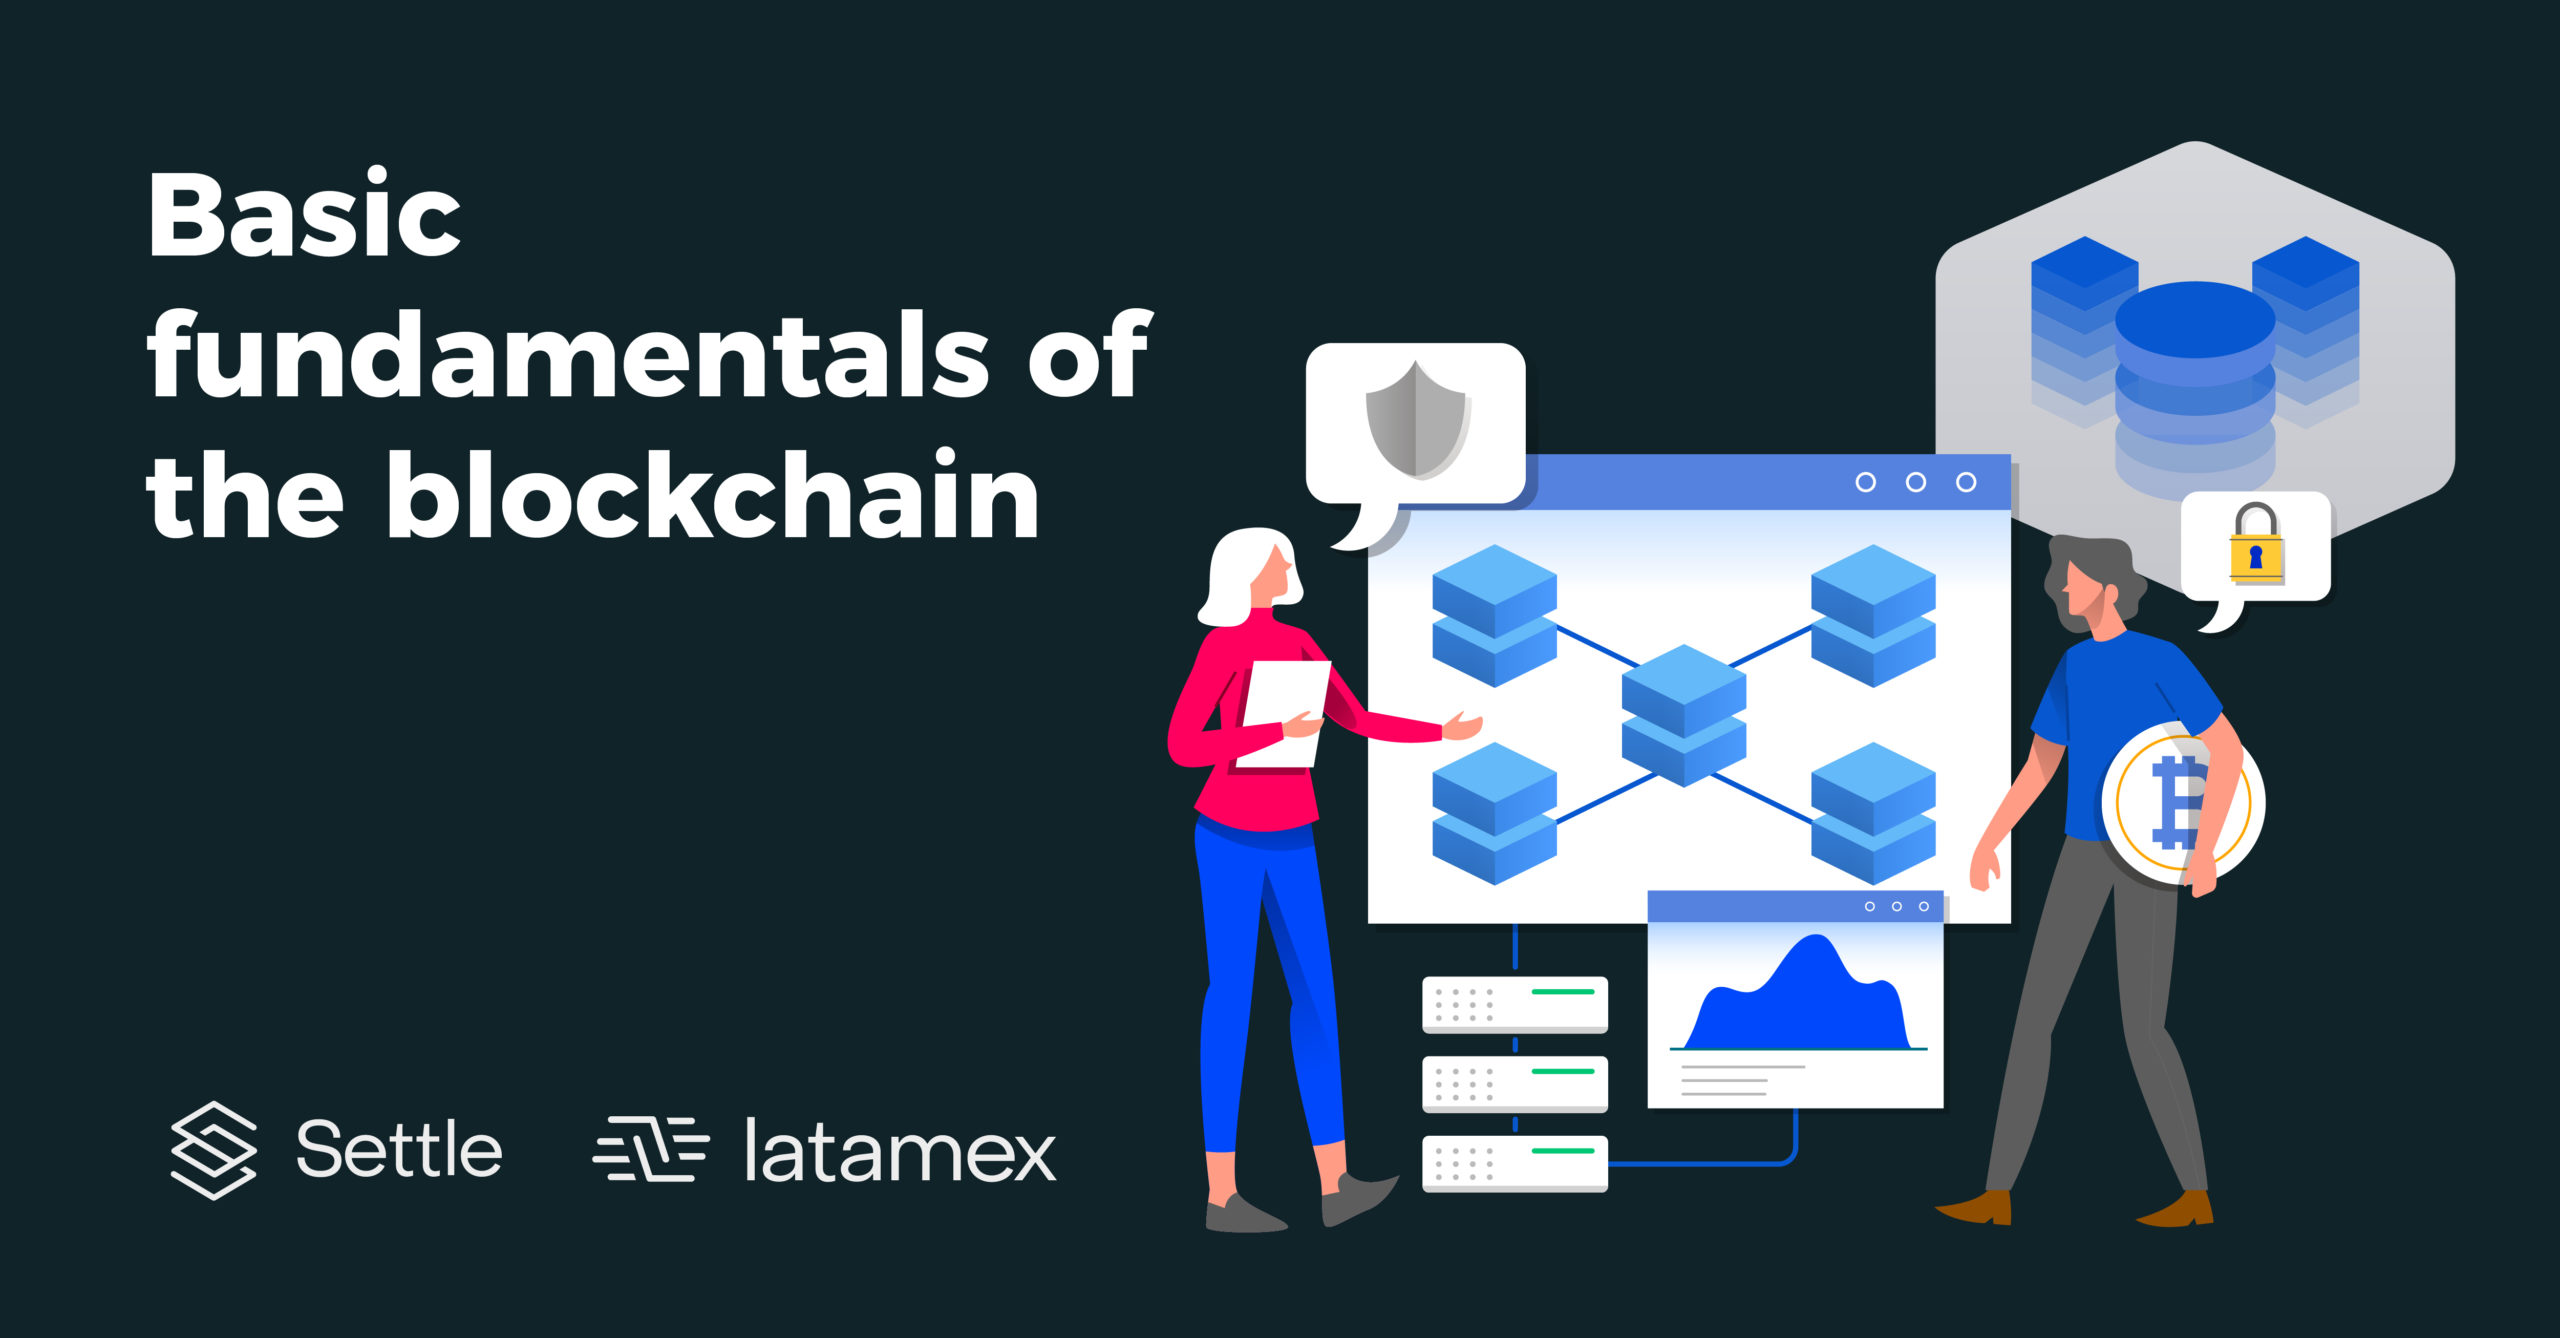 Basic fundamentals of the blockchain